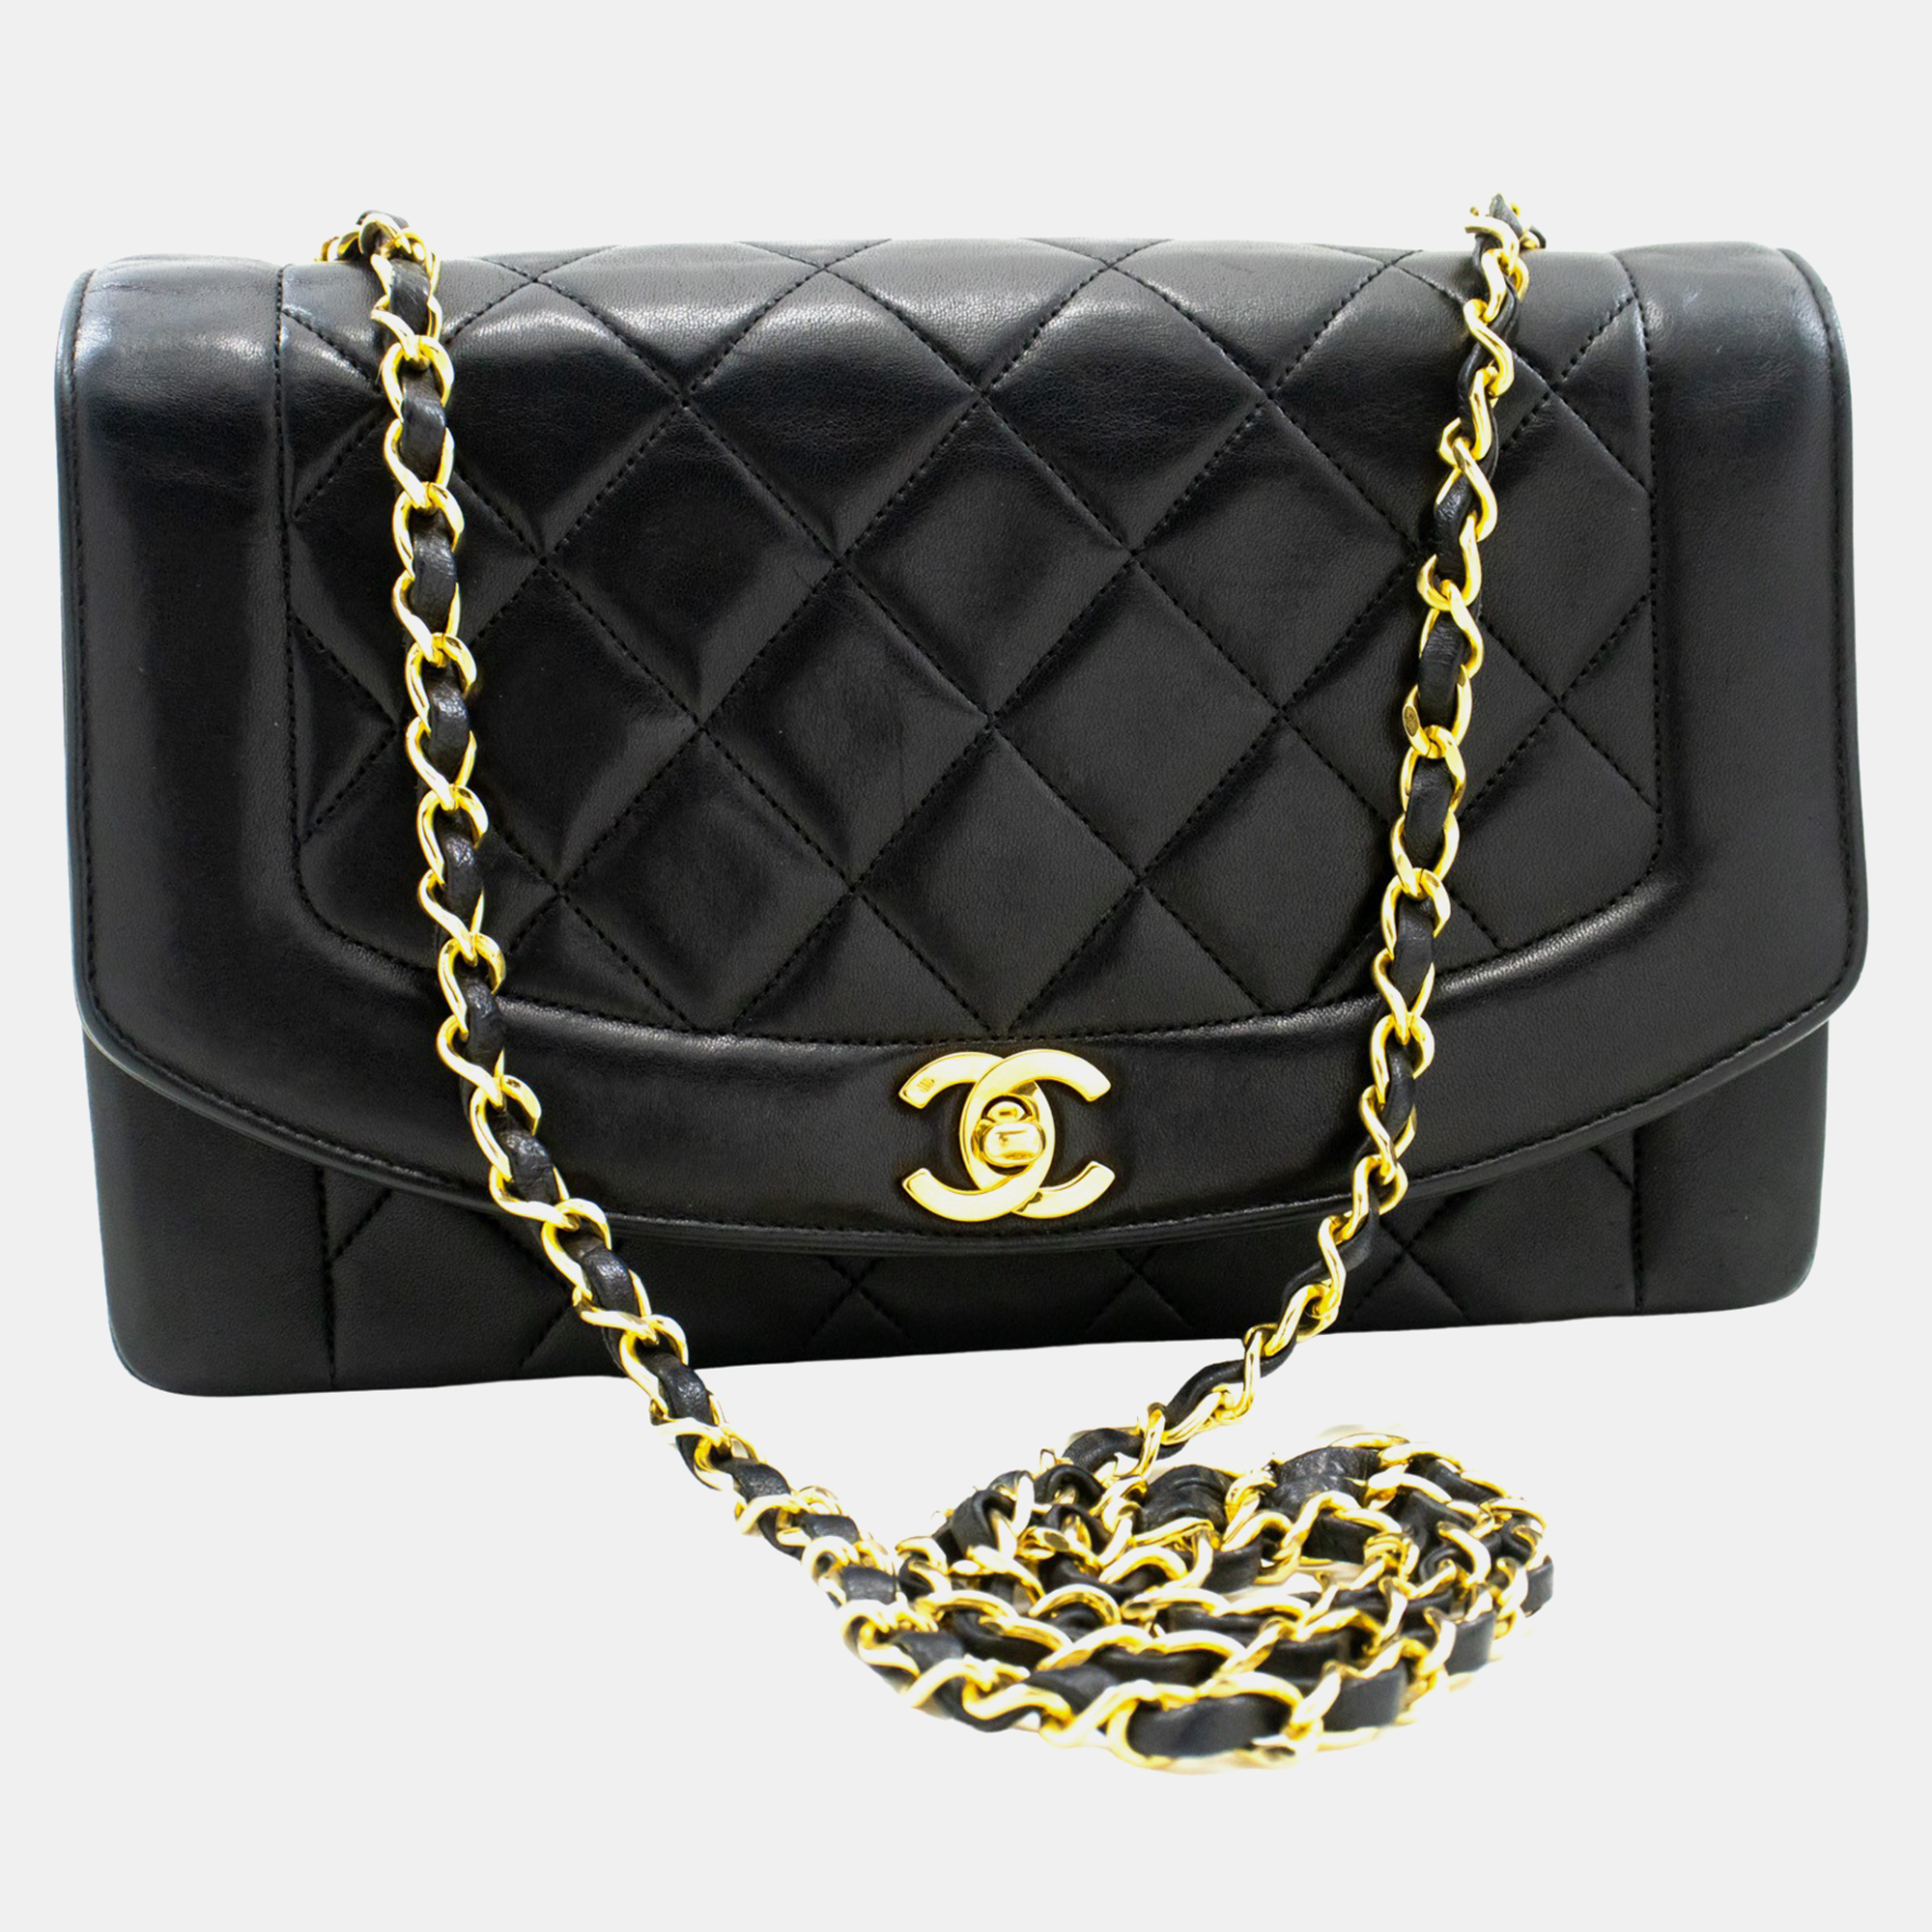 Chanel black leather medium diana flap bag